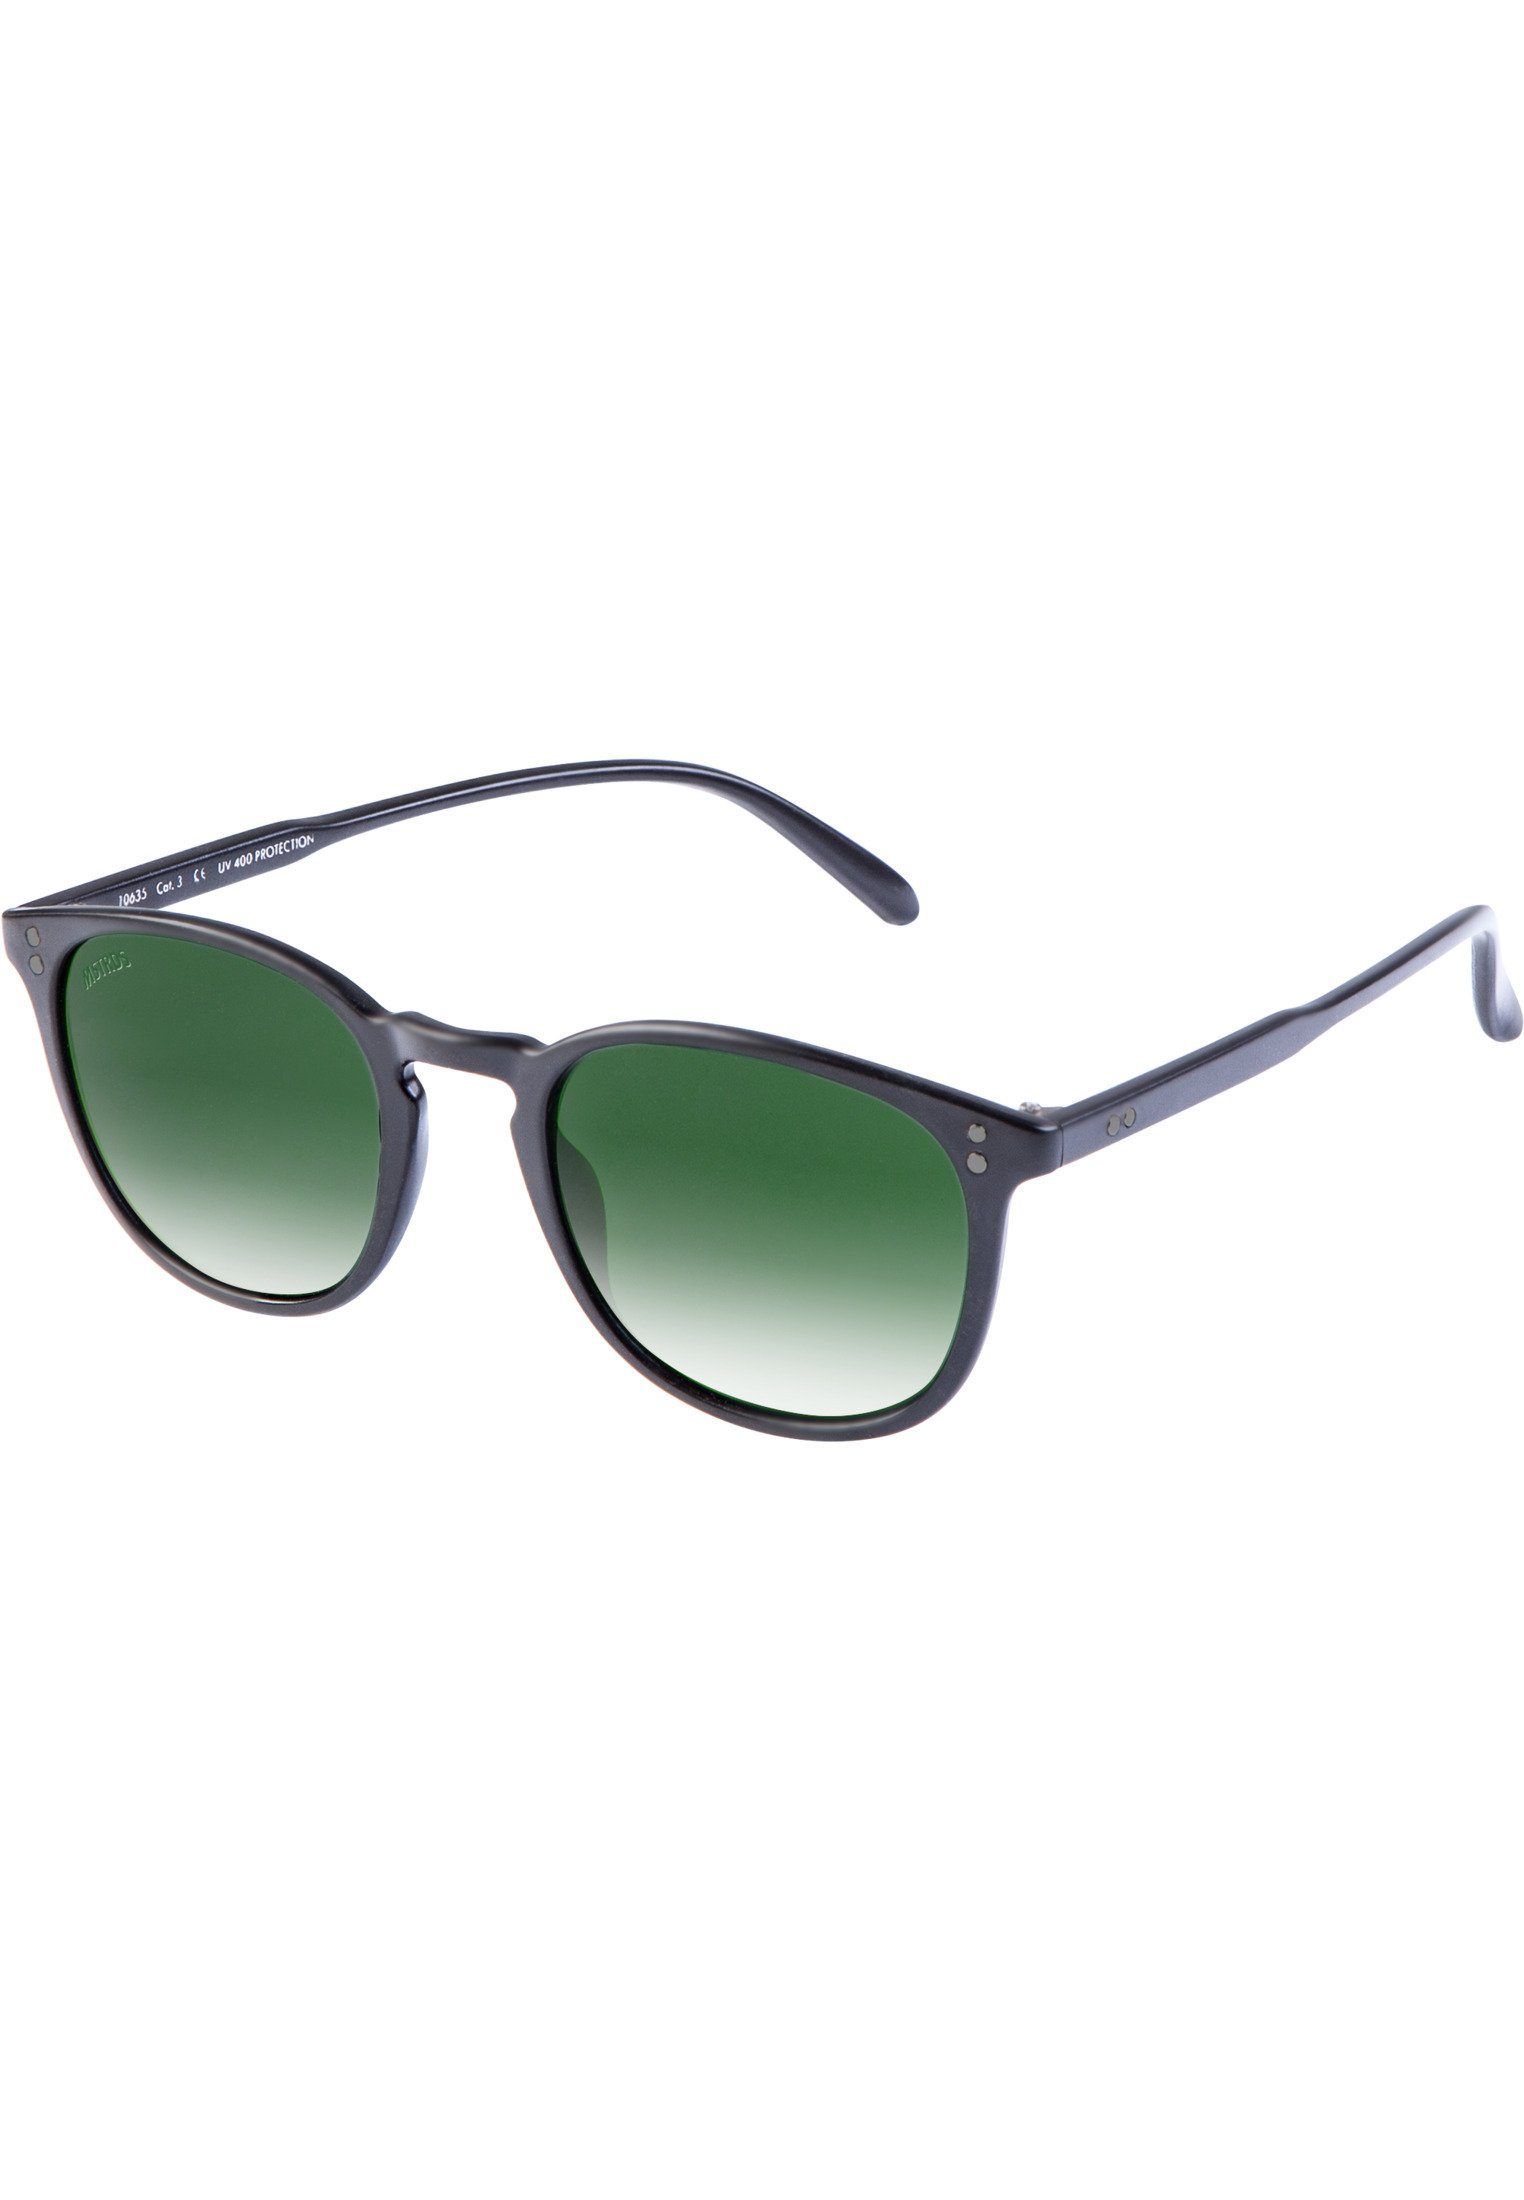 Sonnenbrille Arthur Sunglasses Youth blk/grn Accessoires MSTRDS